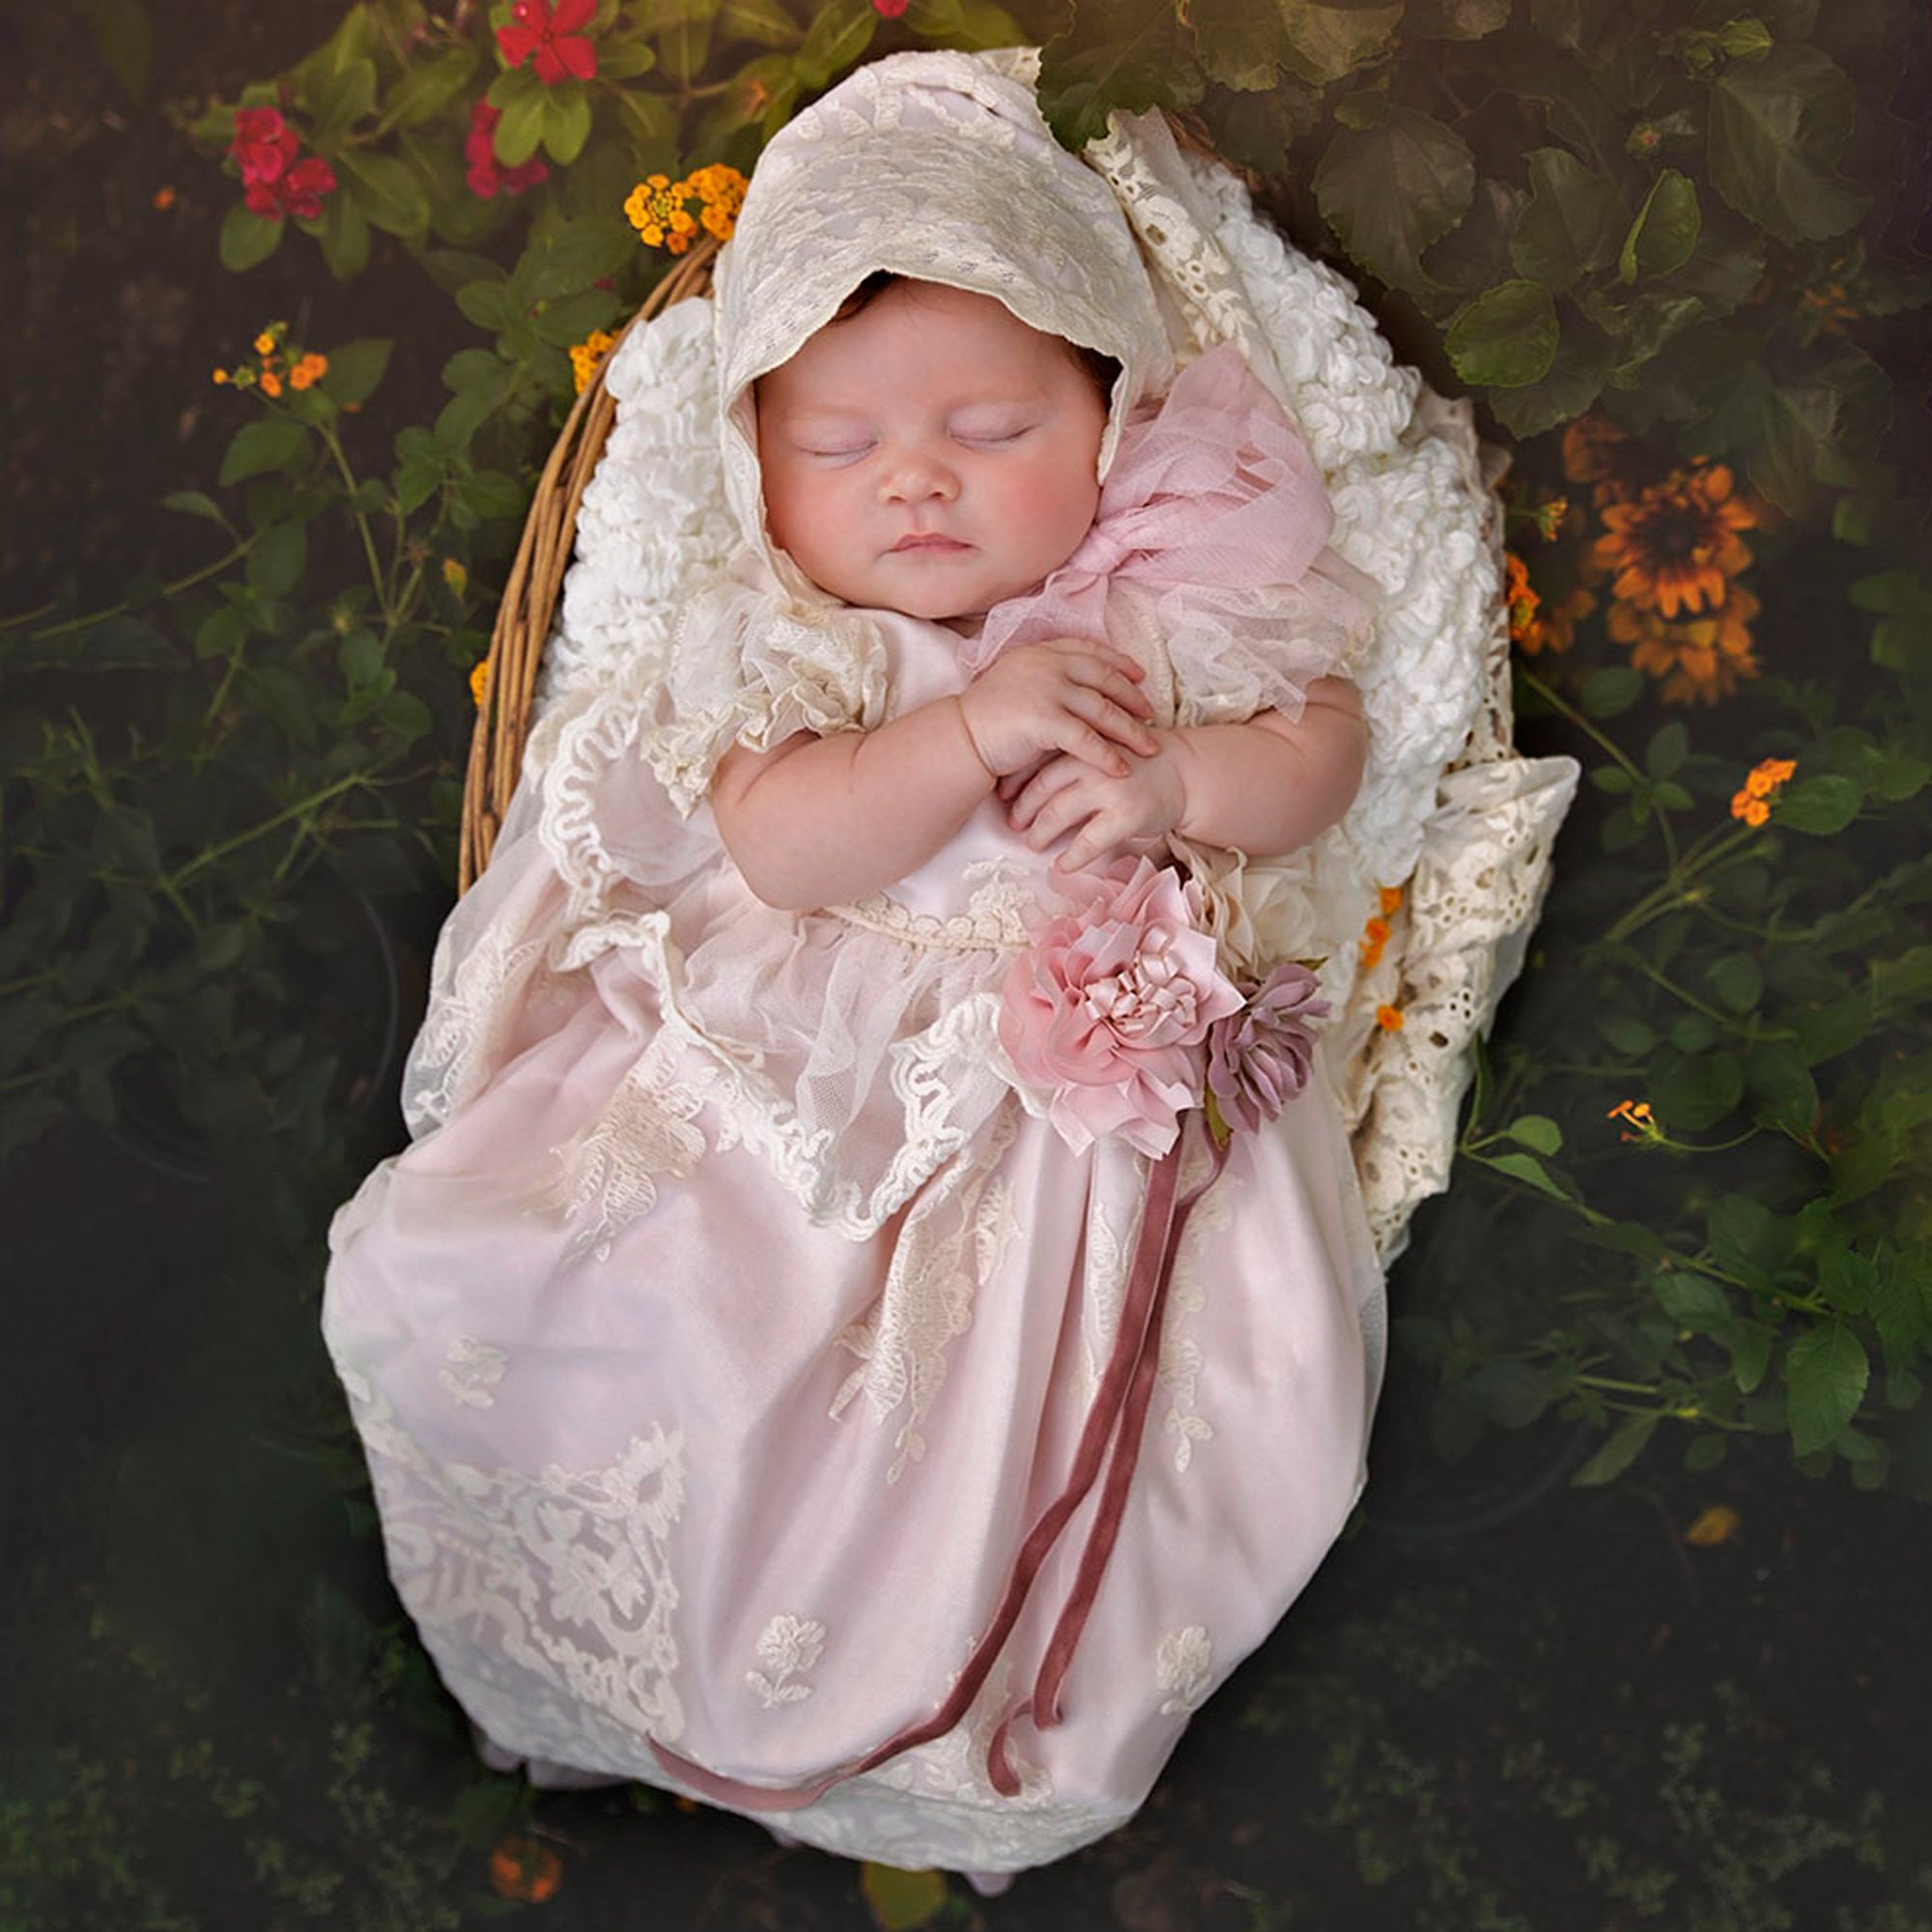 frilly baby dresses newborn